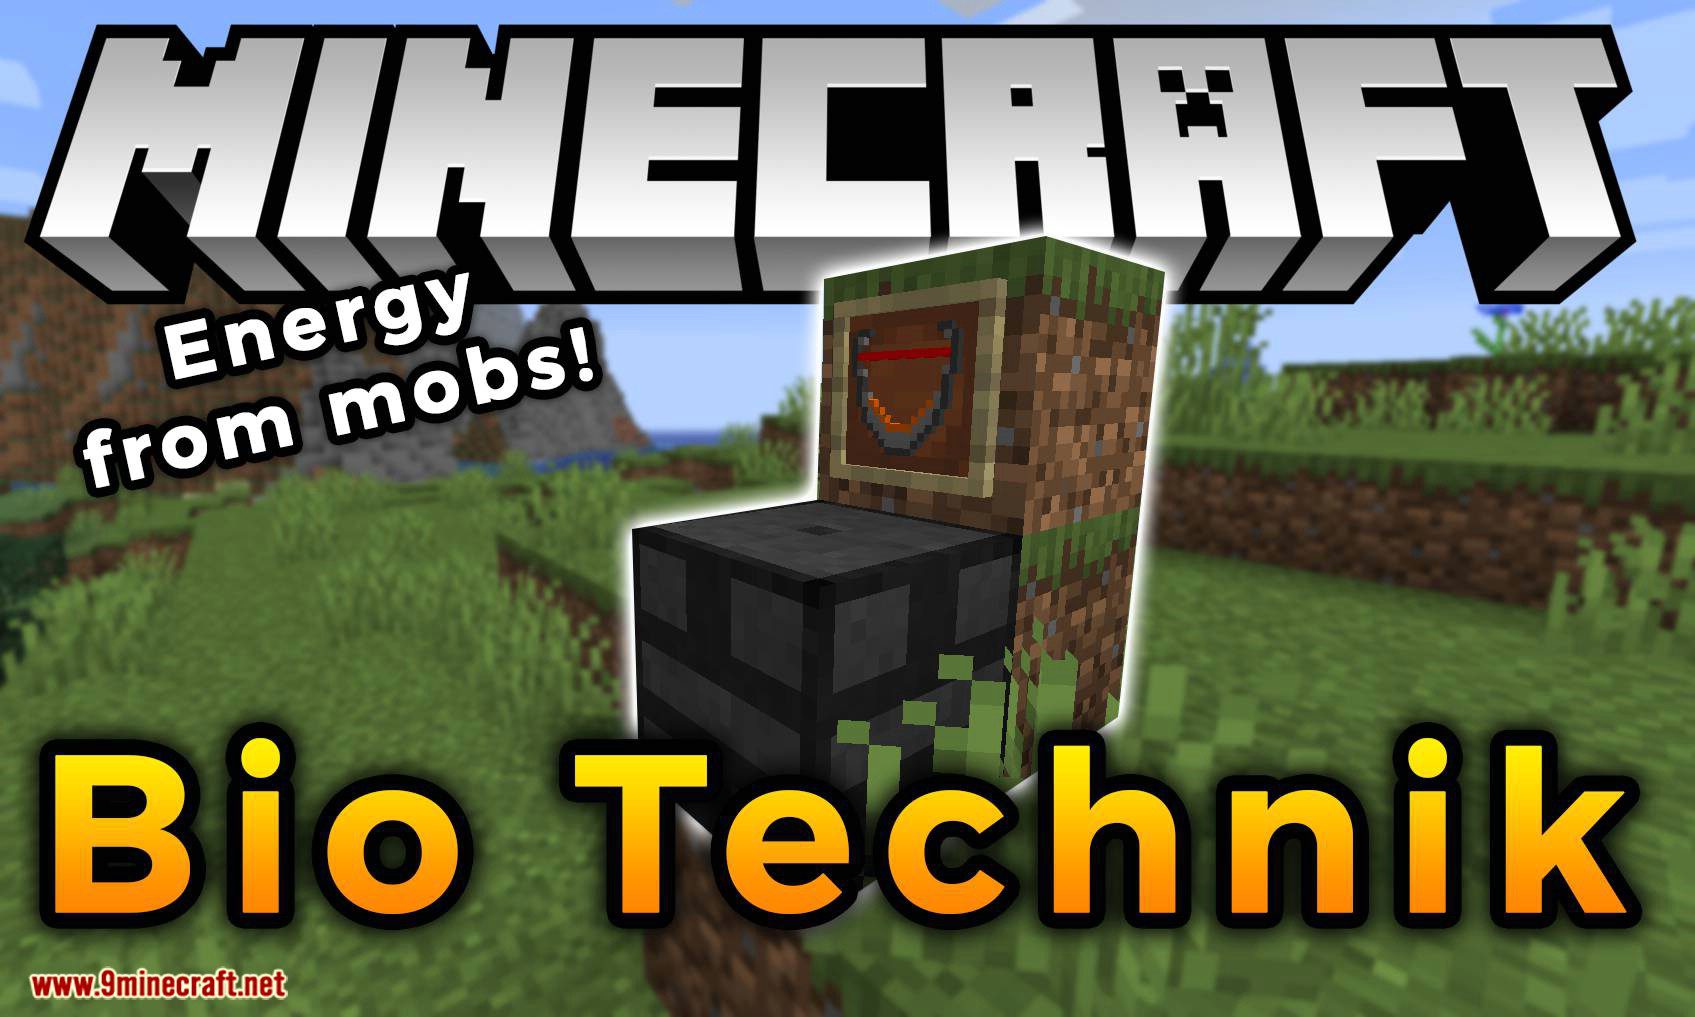 Bio Technik mod for minecraft logo